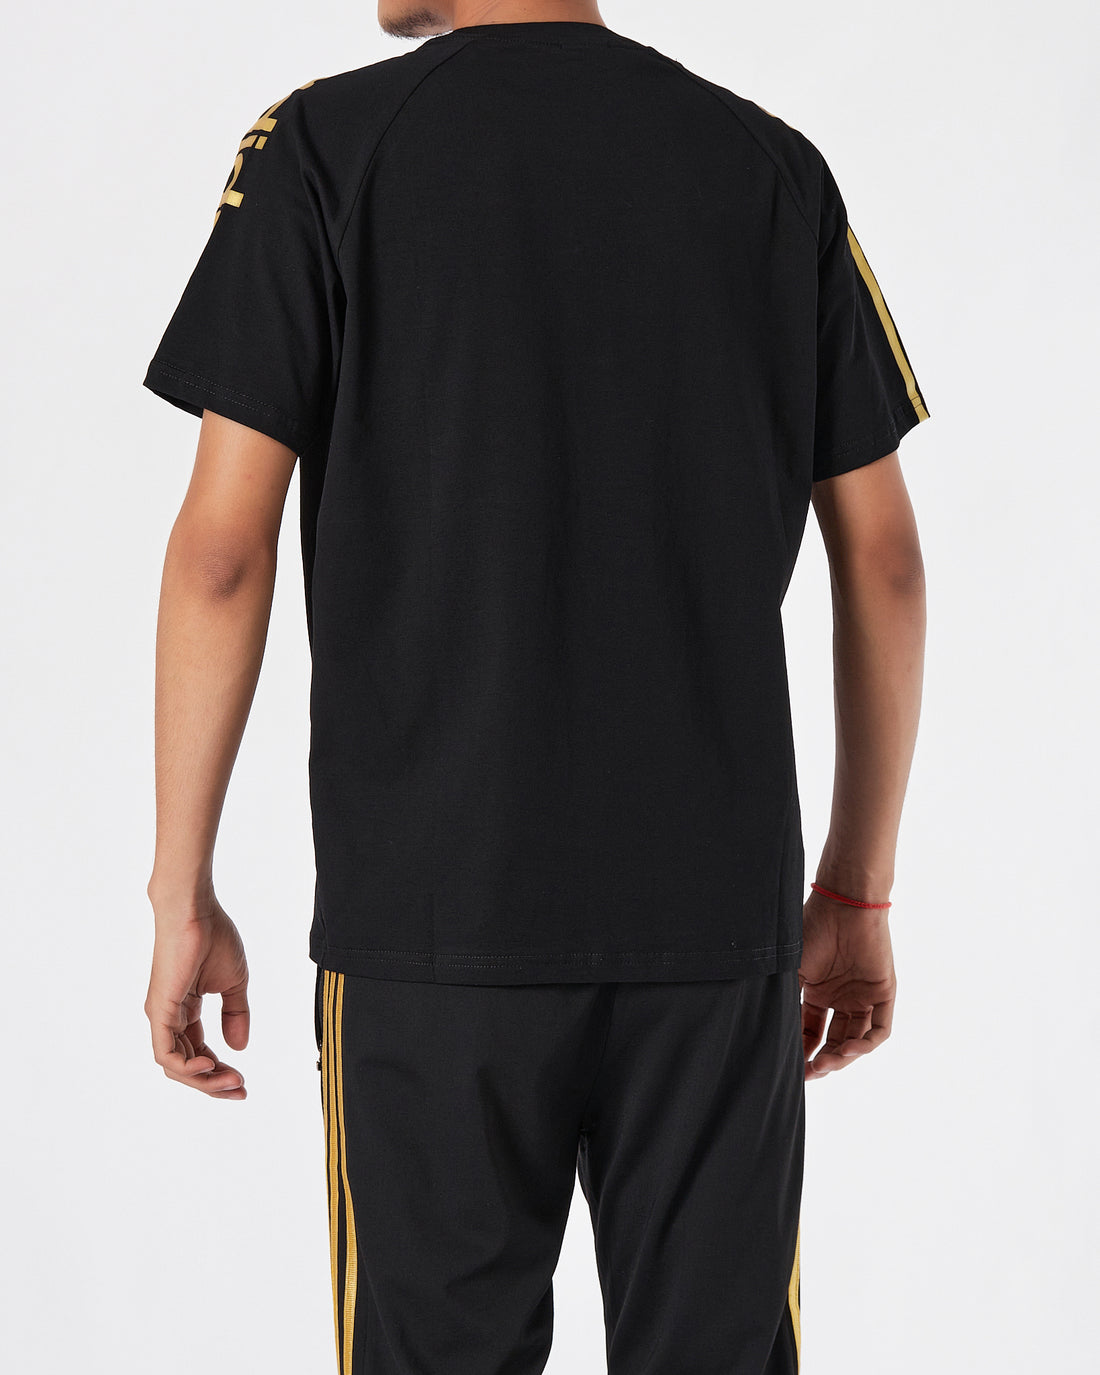 ADI Gold Striped Men Black Sport T-Shirt 15.90